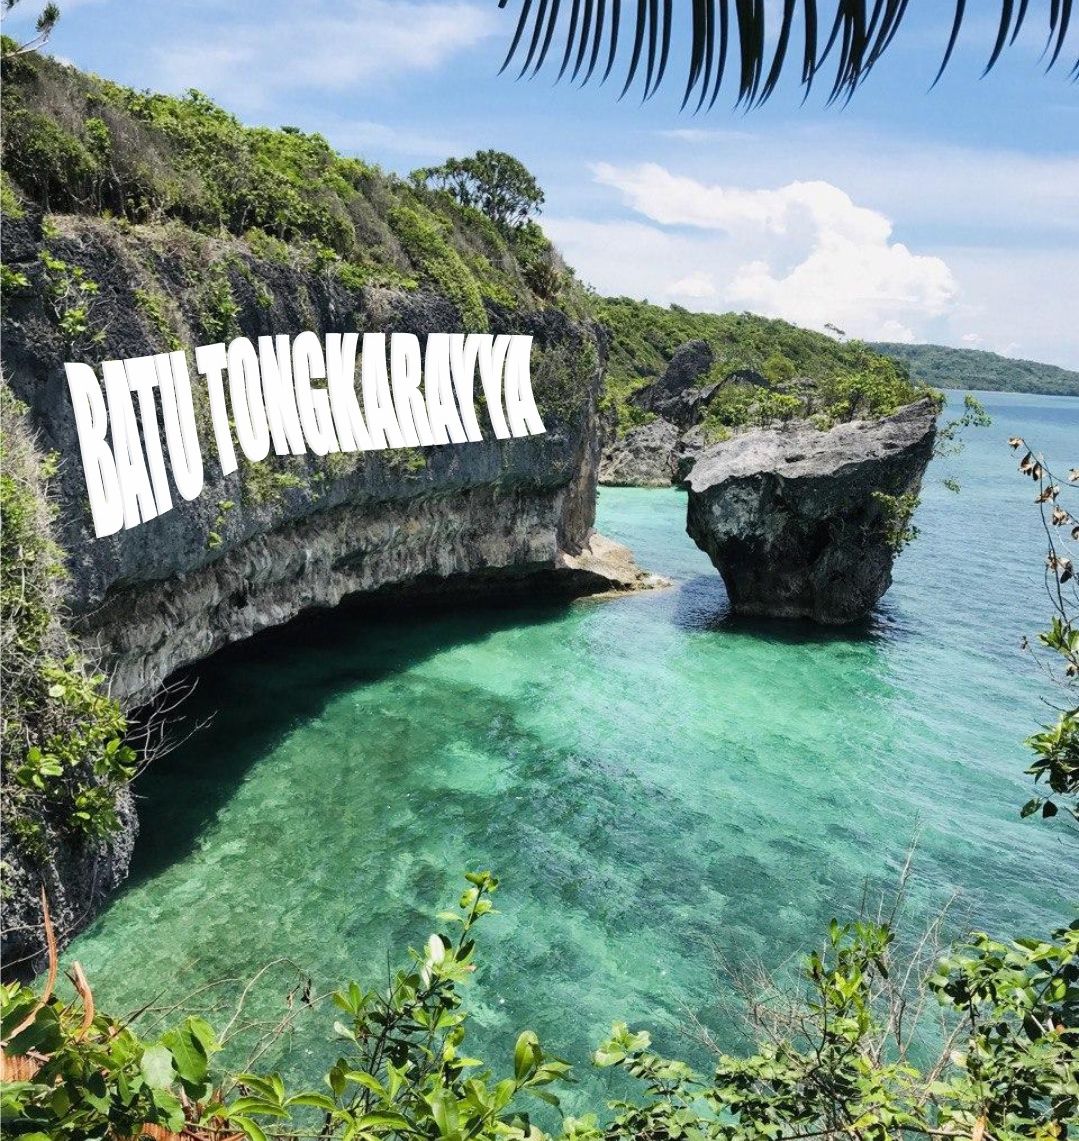 Wisata tebing Batu Tongkarayya di Desa Lembanna kecamatan Bontobahari Kabupaten Bulukumba Sulawesi Selatan.